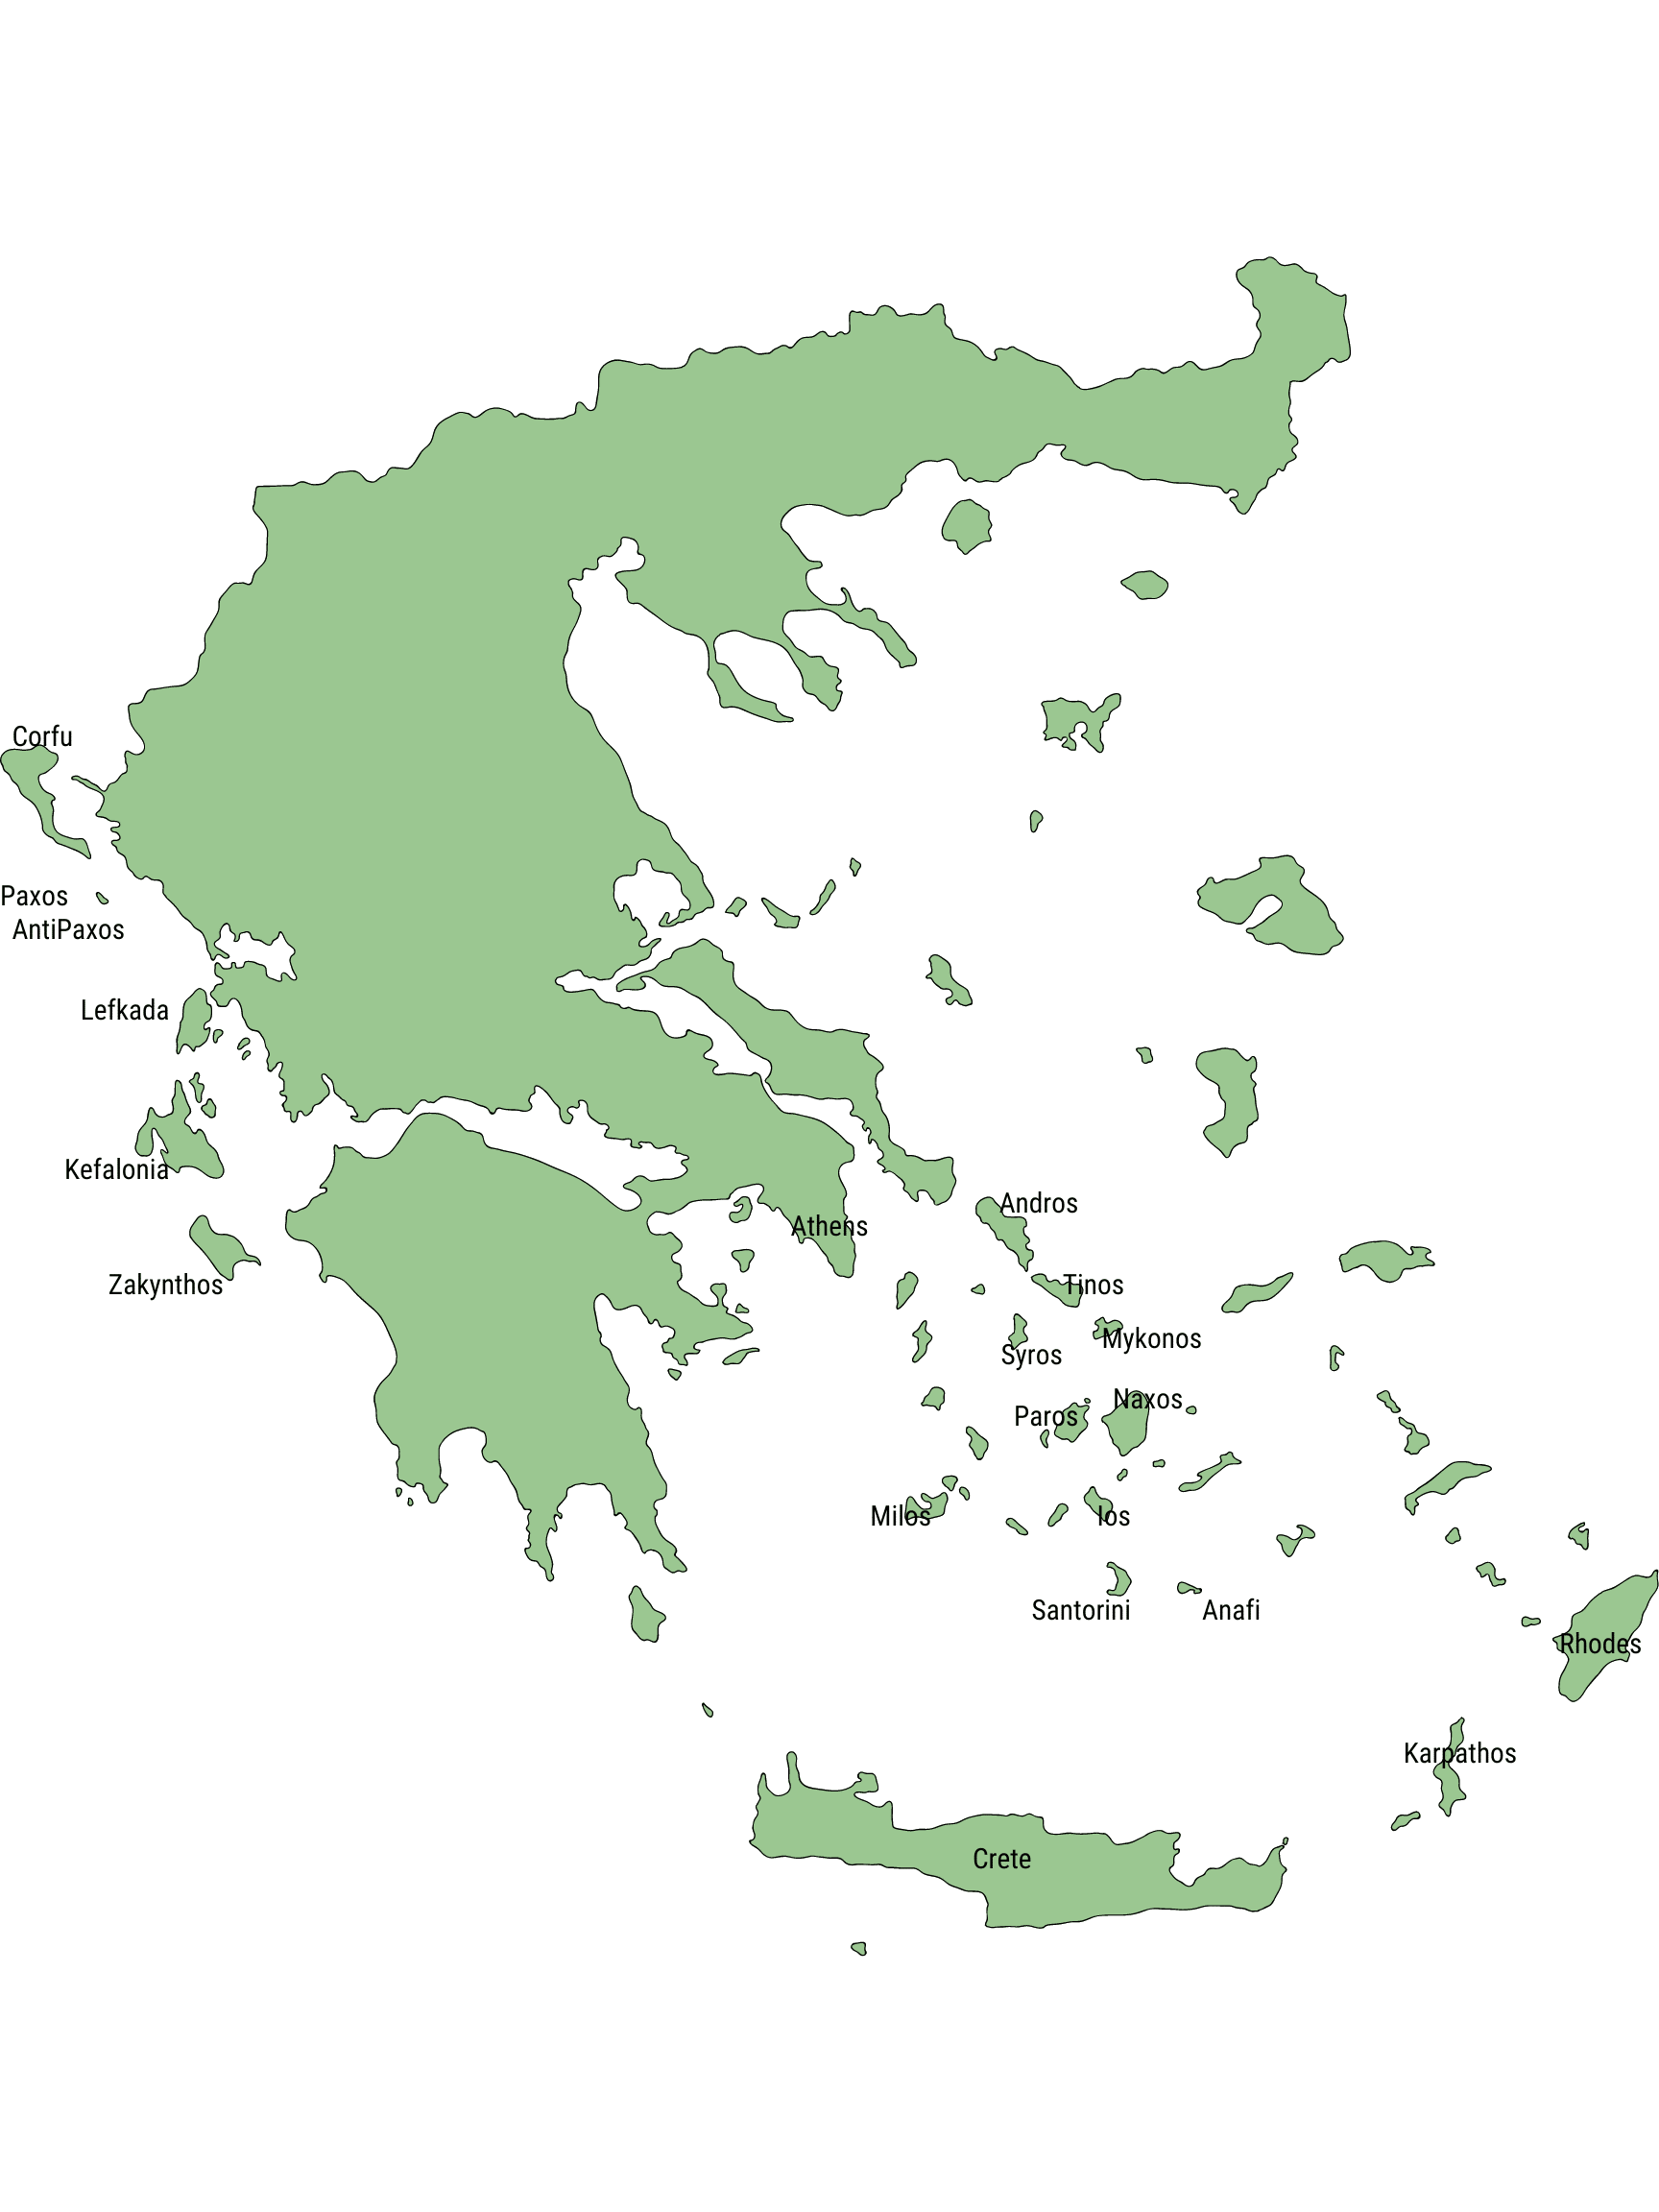 Greek island map with English names